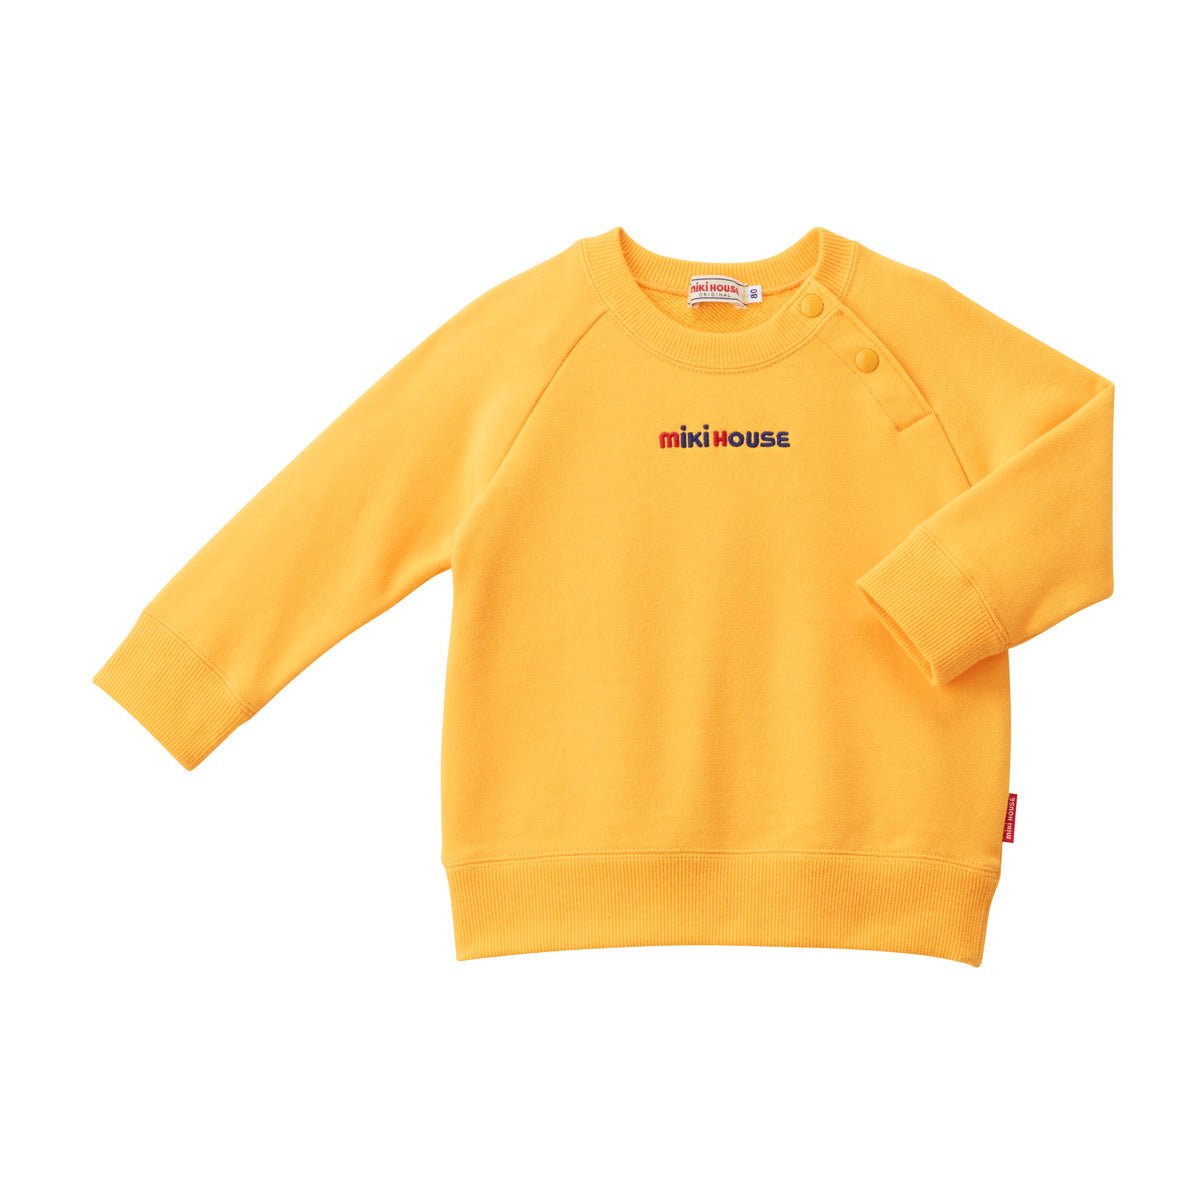 MIKI HOUSE Embroidered Logo Sweatshirt Classic - 10-5605-386-04-80